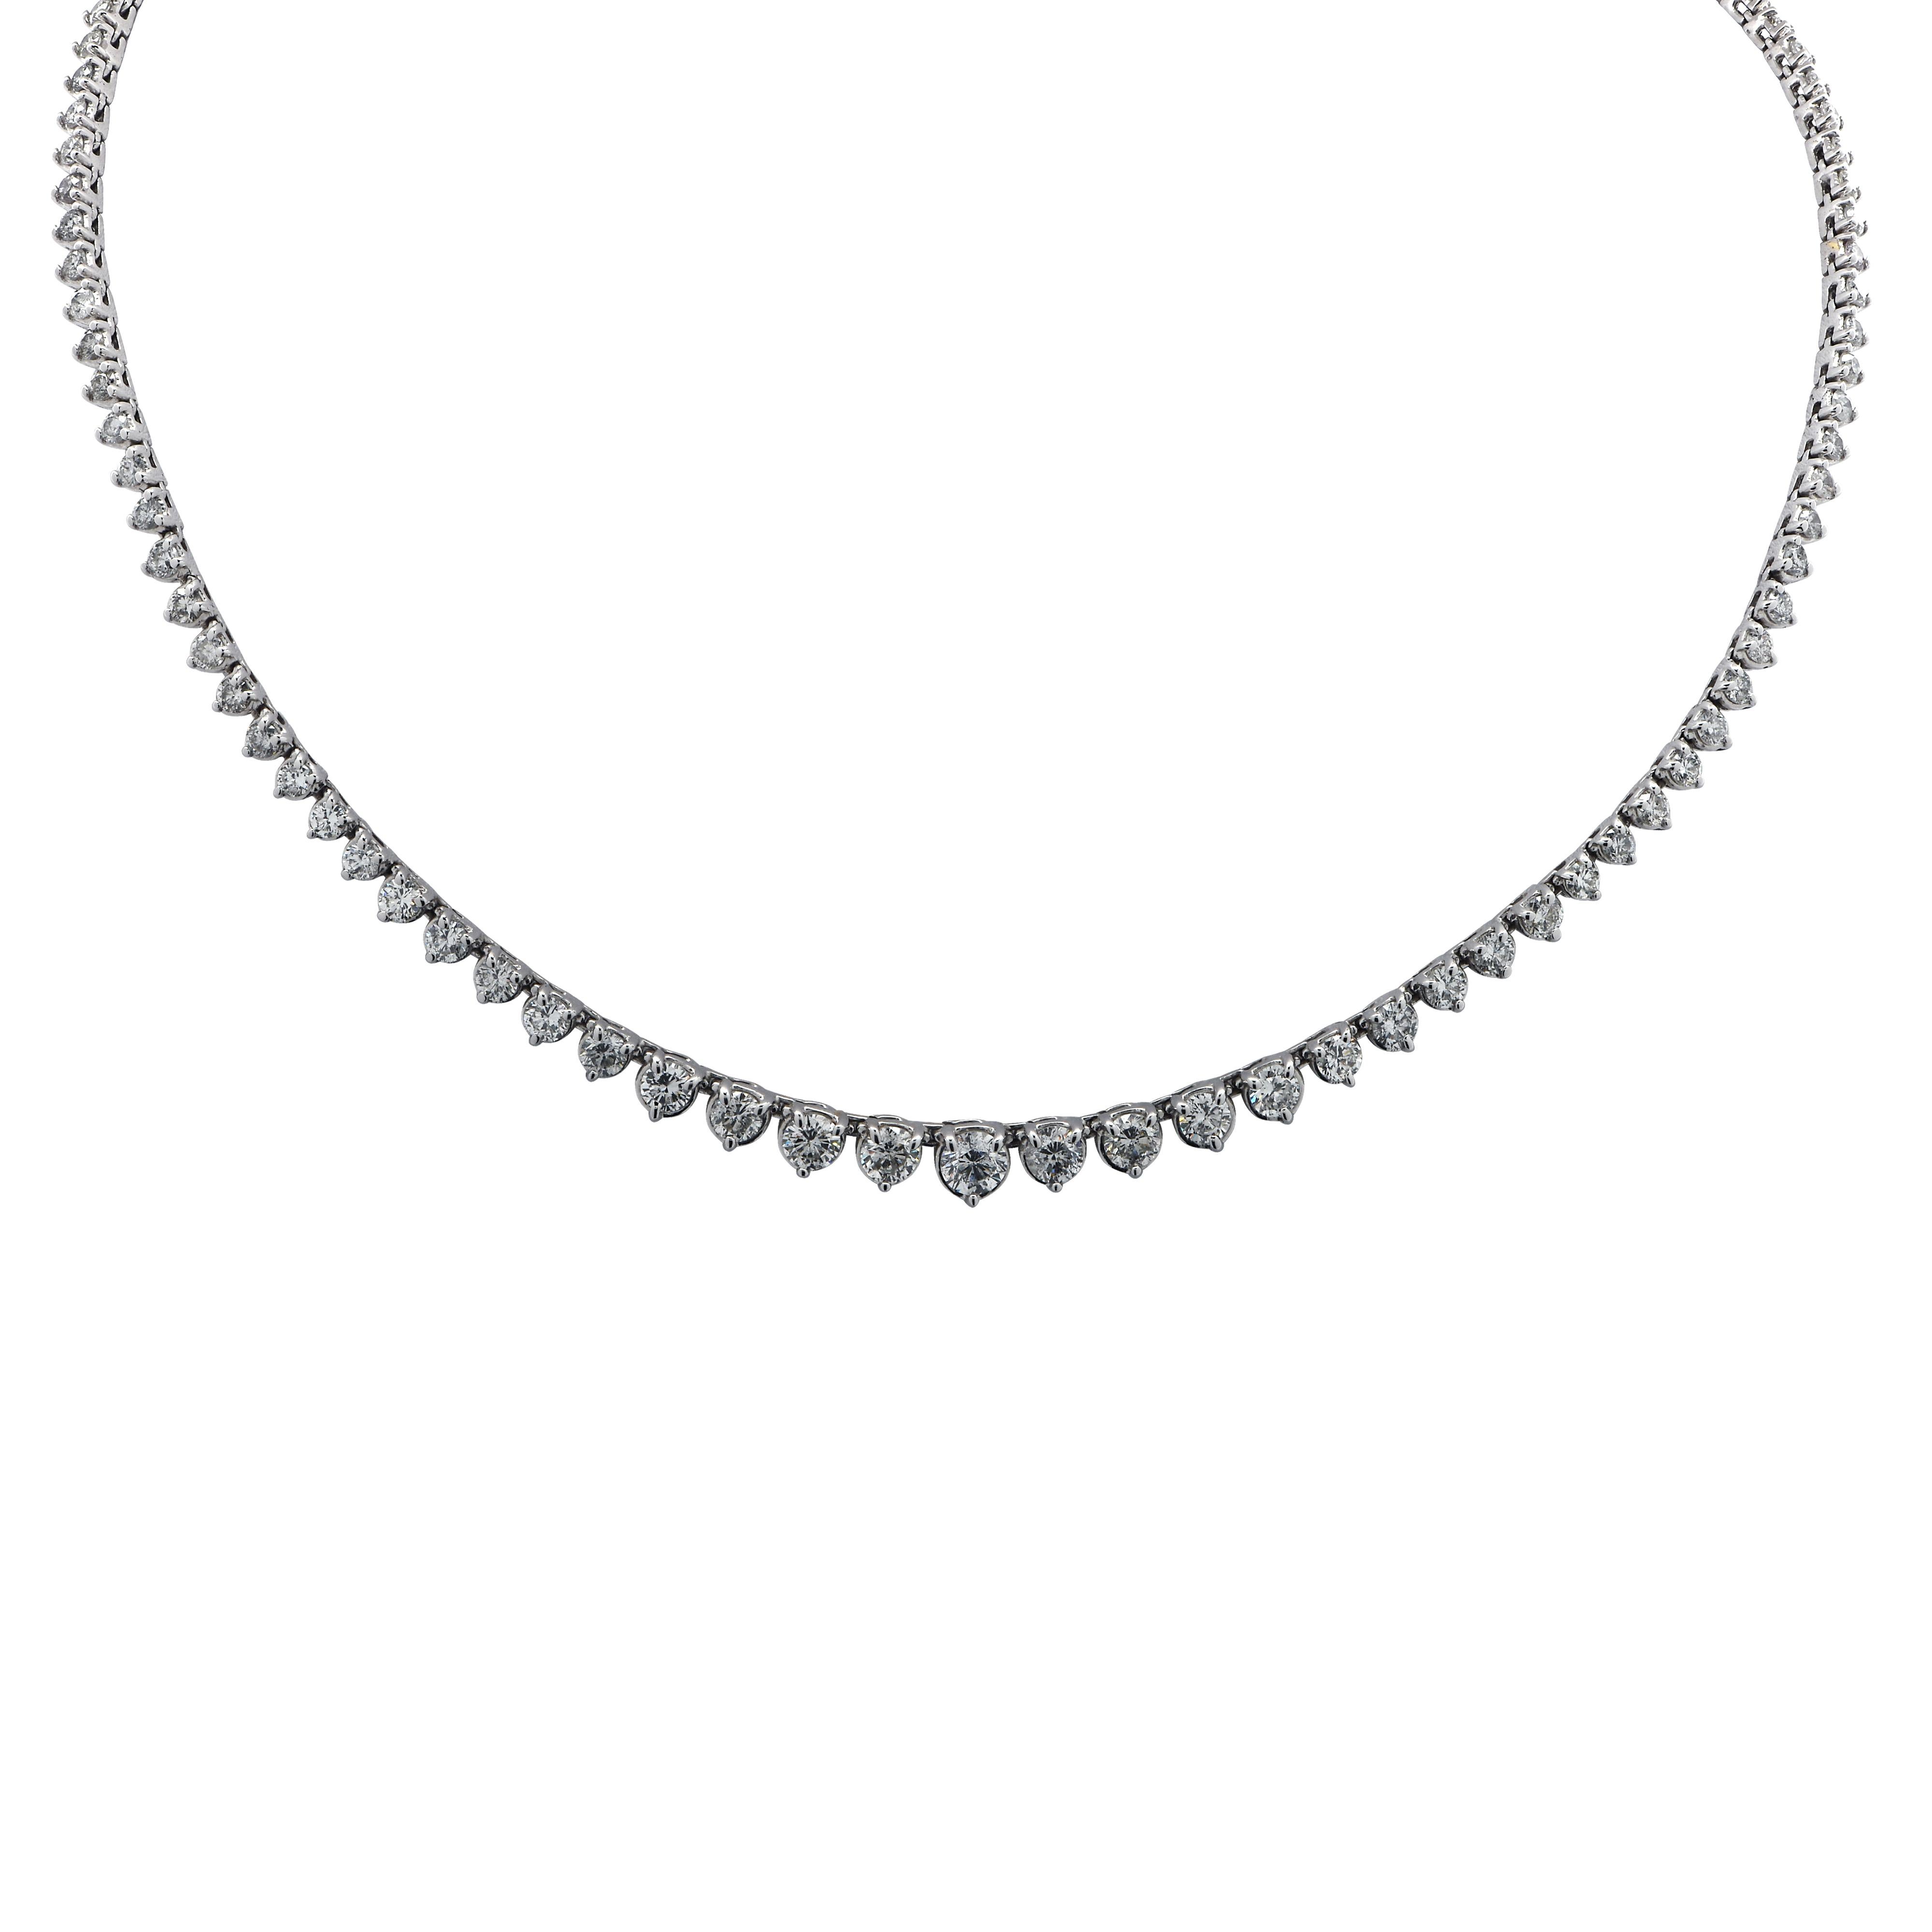 Modern 8.5 Carat Riviere Diamond Necklace